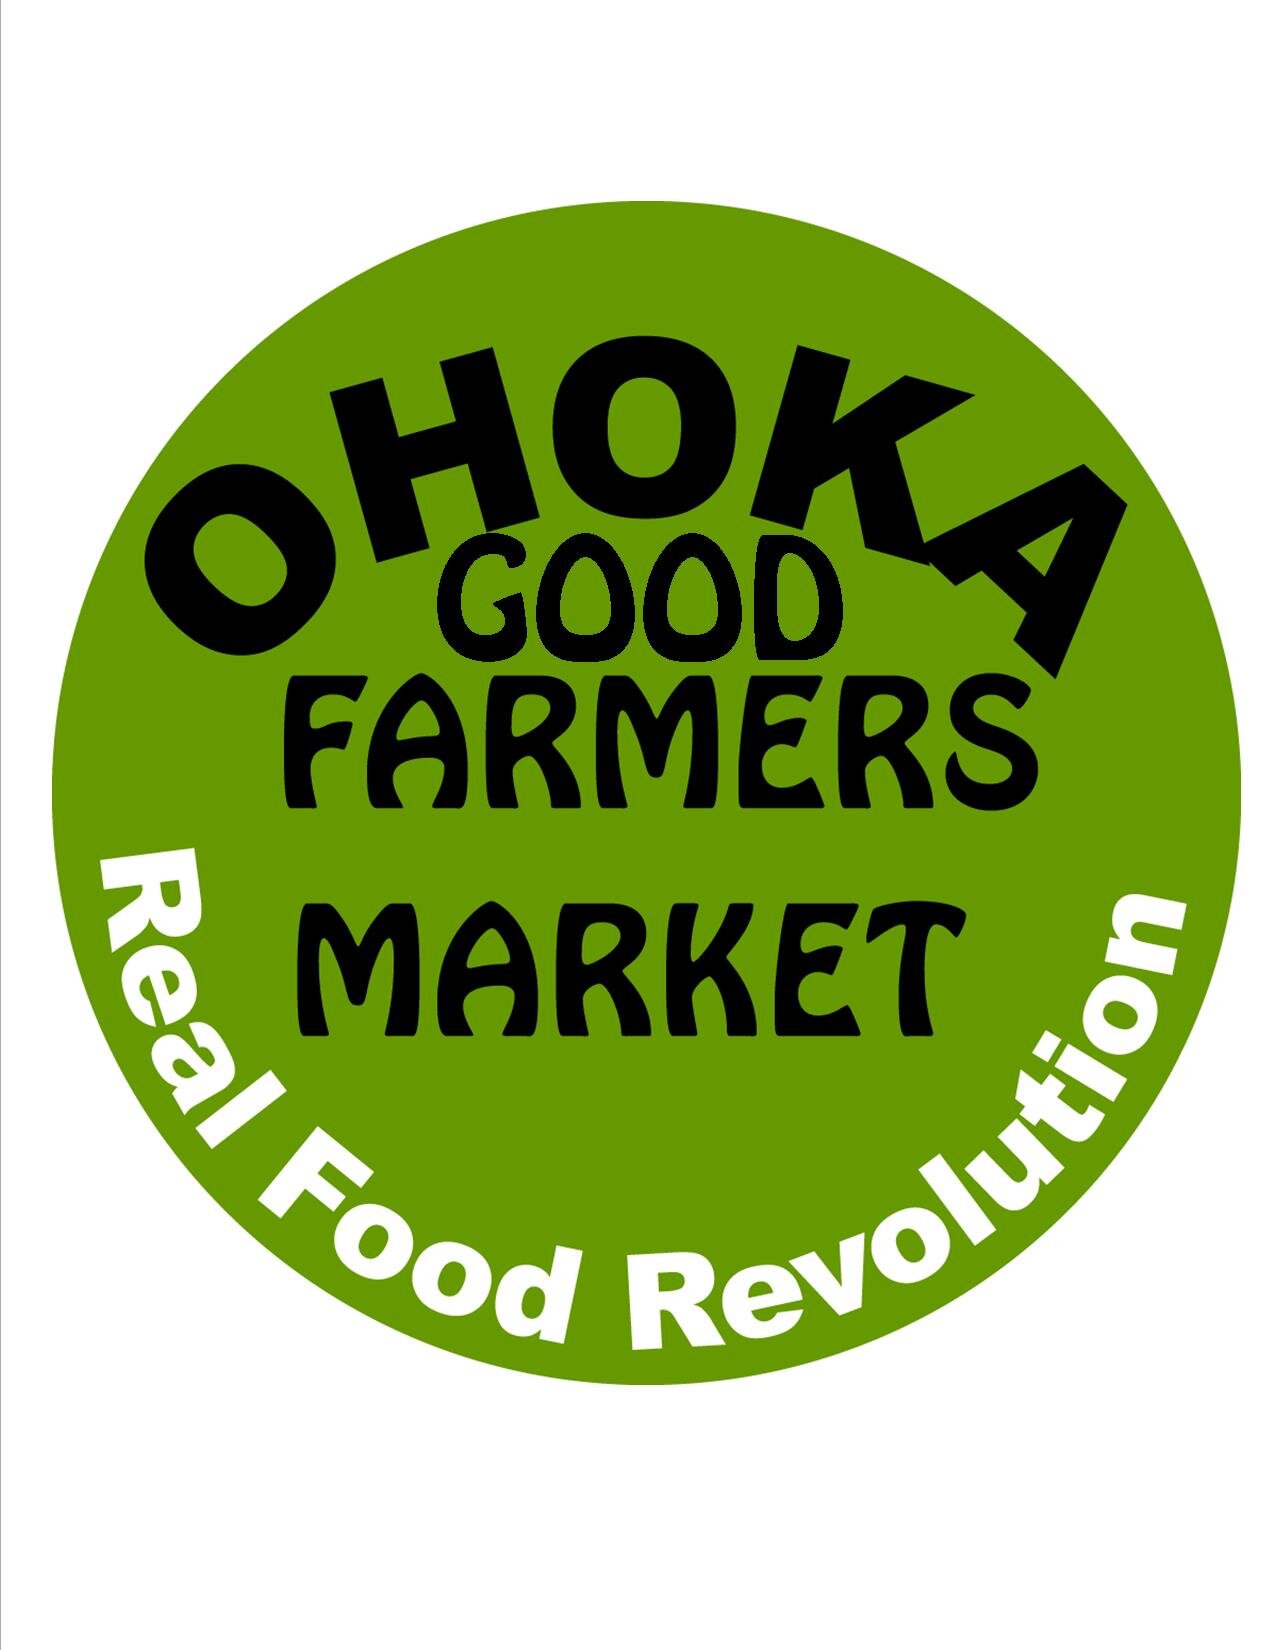 Ohoka Farmers Market